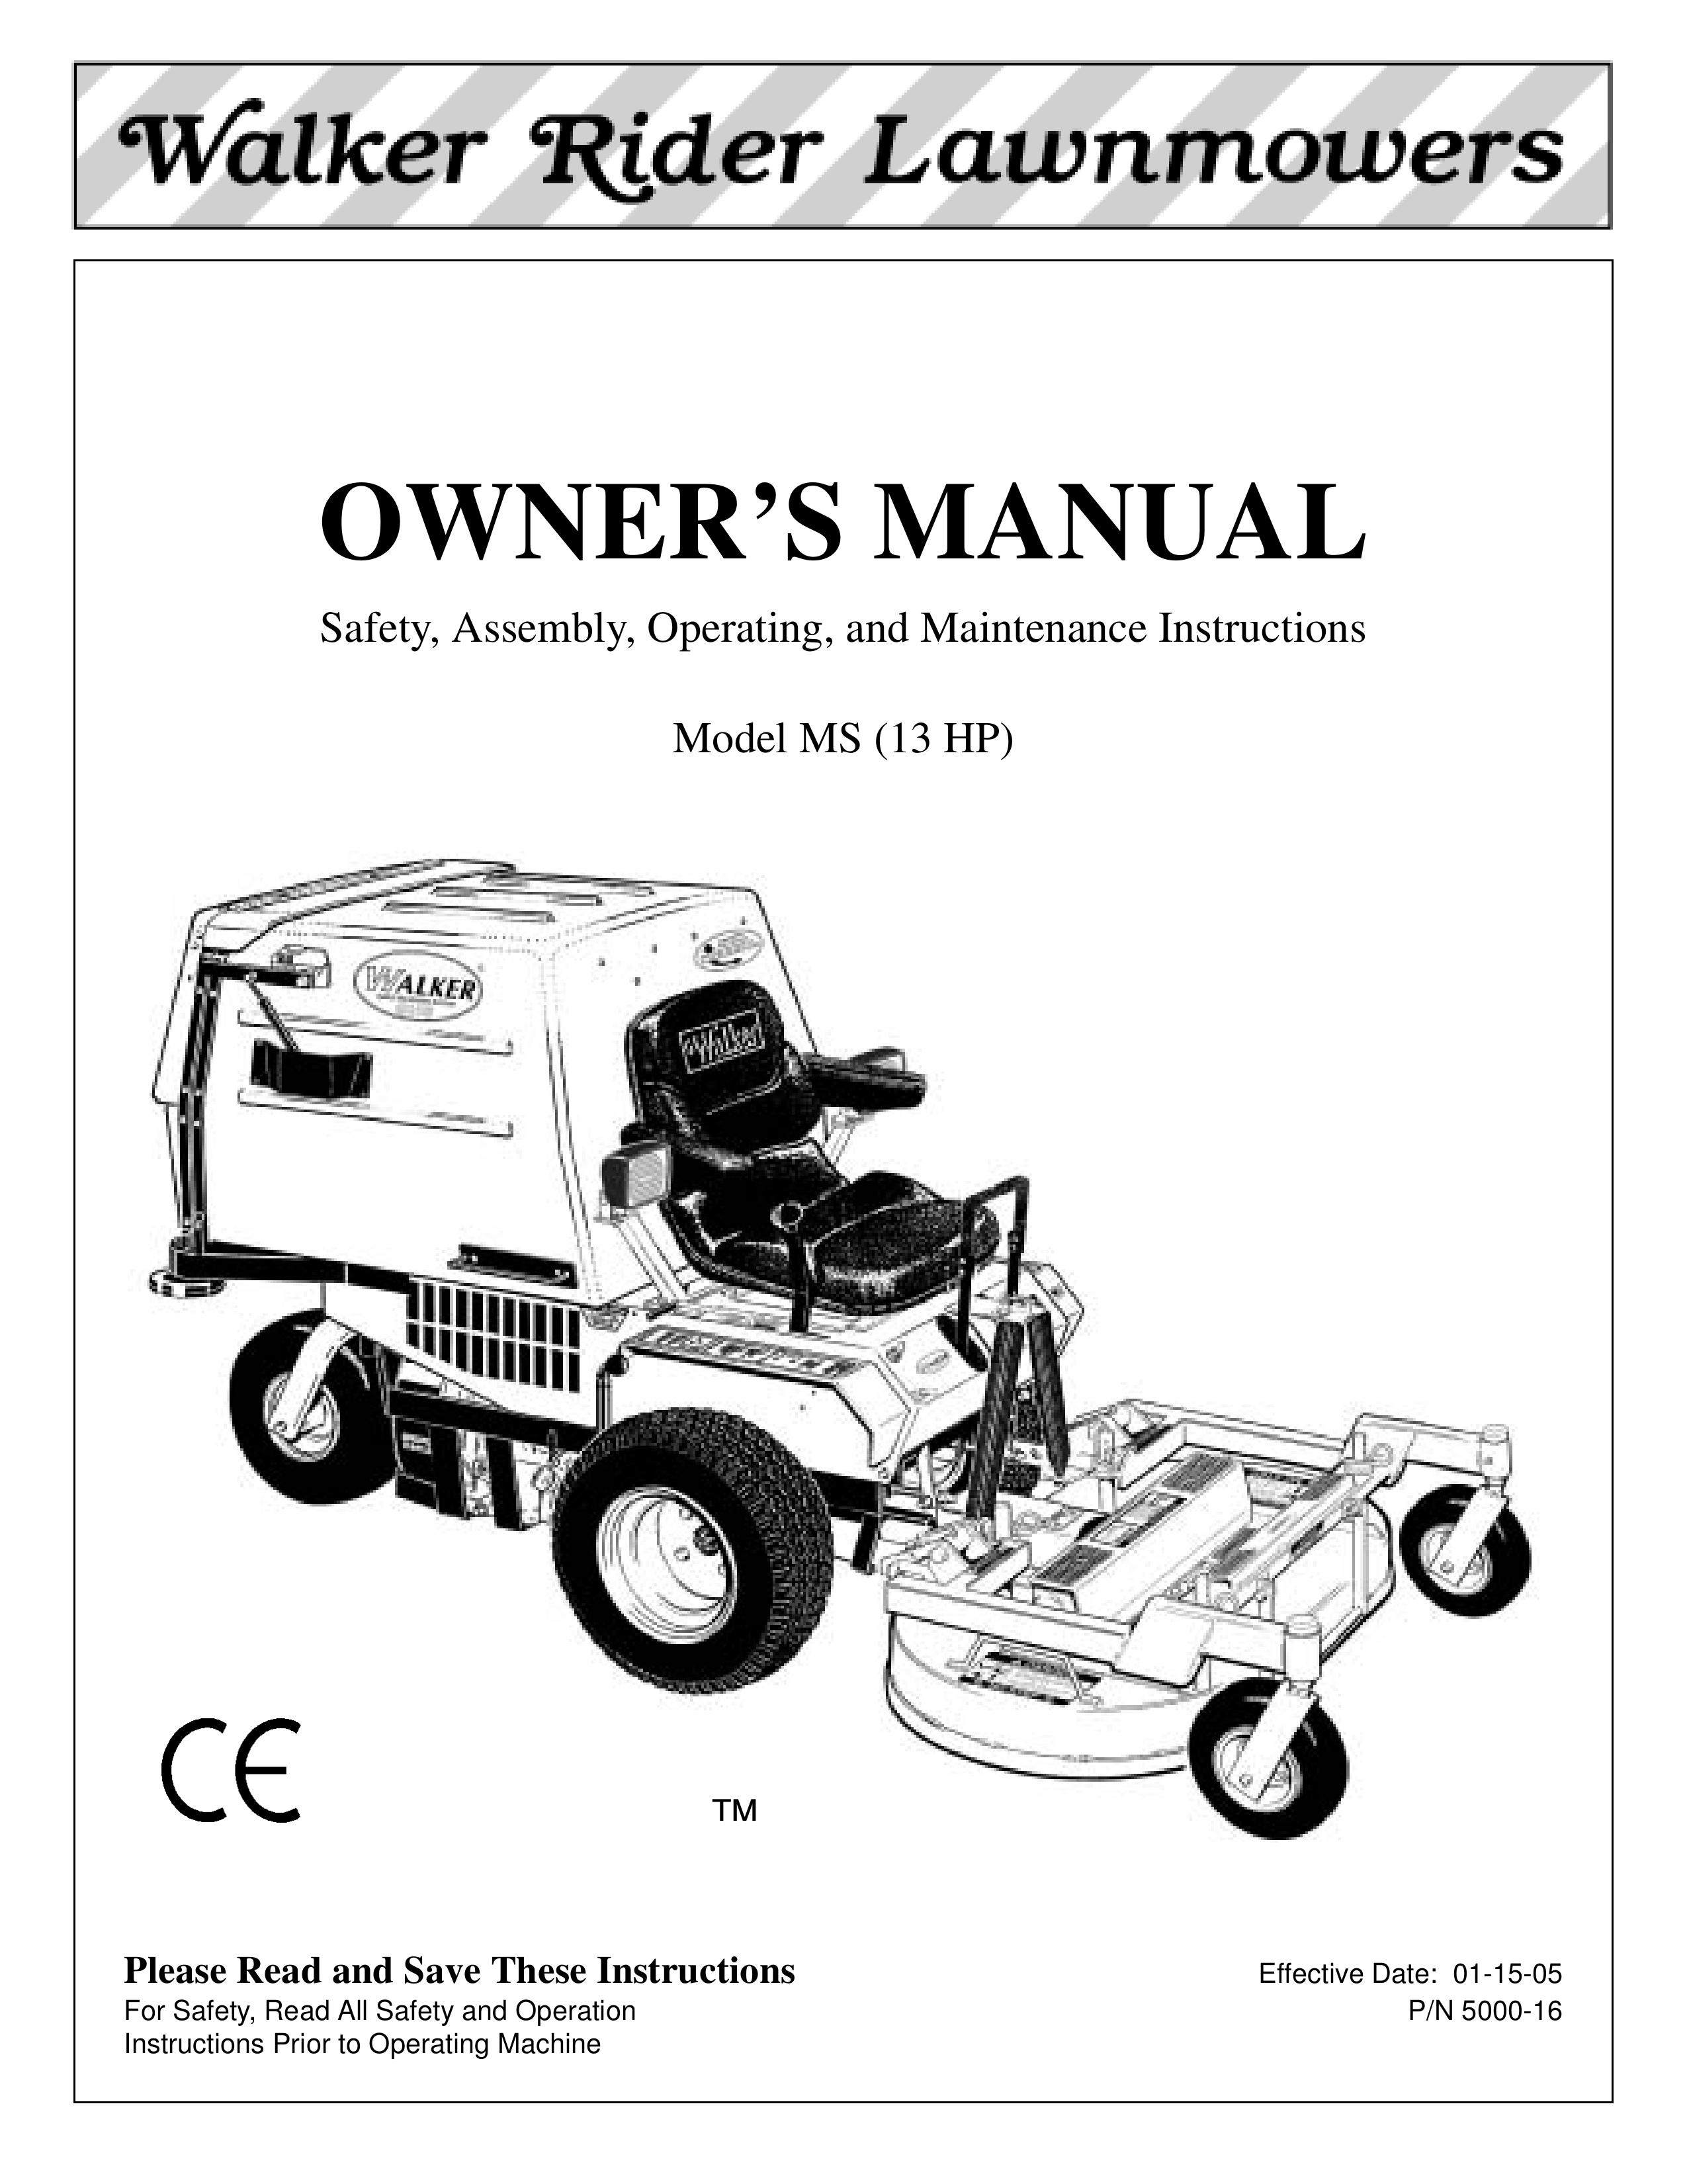 Walker MS (13 HP) Lawn Mower User Manual